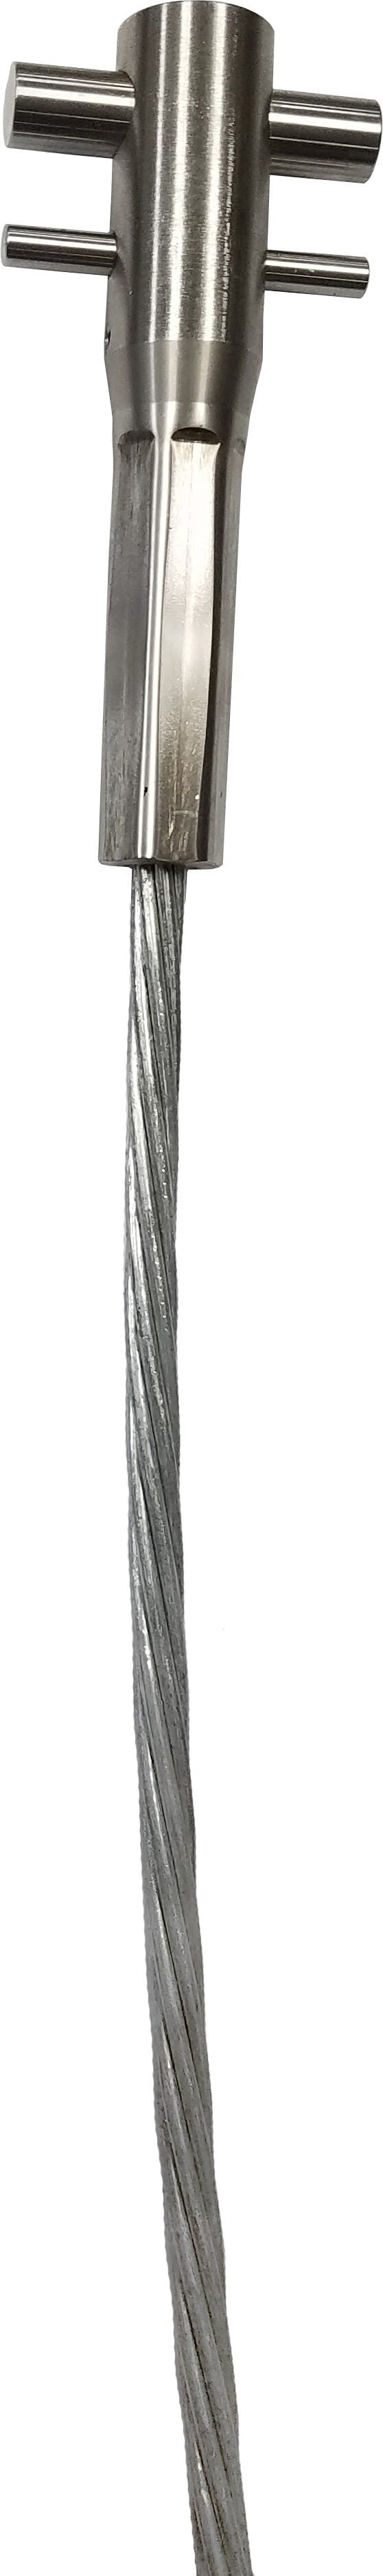 3M™ DBI-SALA® Lad-Saf™ Swaged Cable 6115006, 3/8 Inch, Galvanized Steel, 20 m